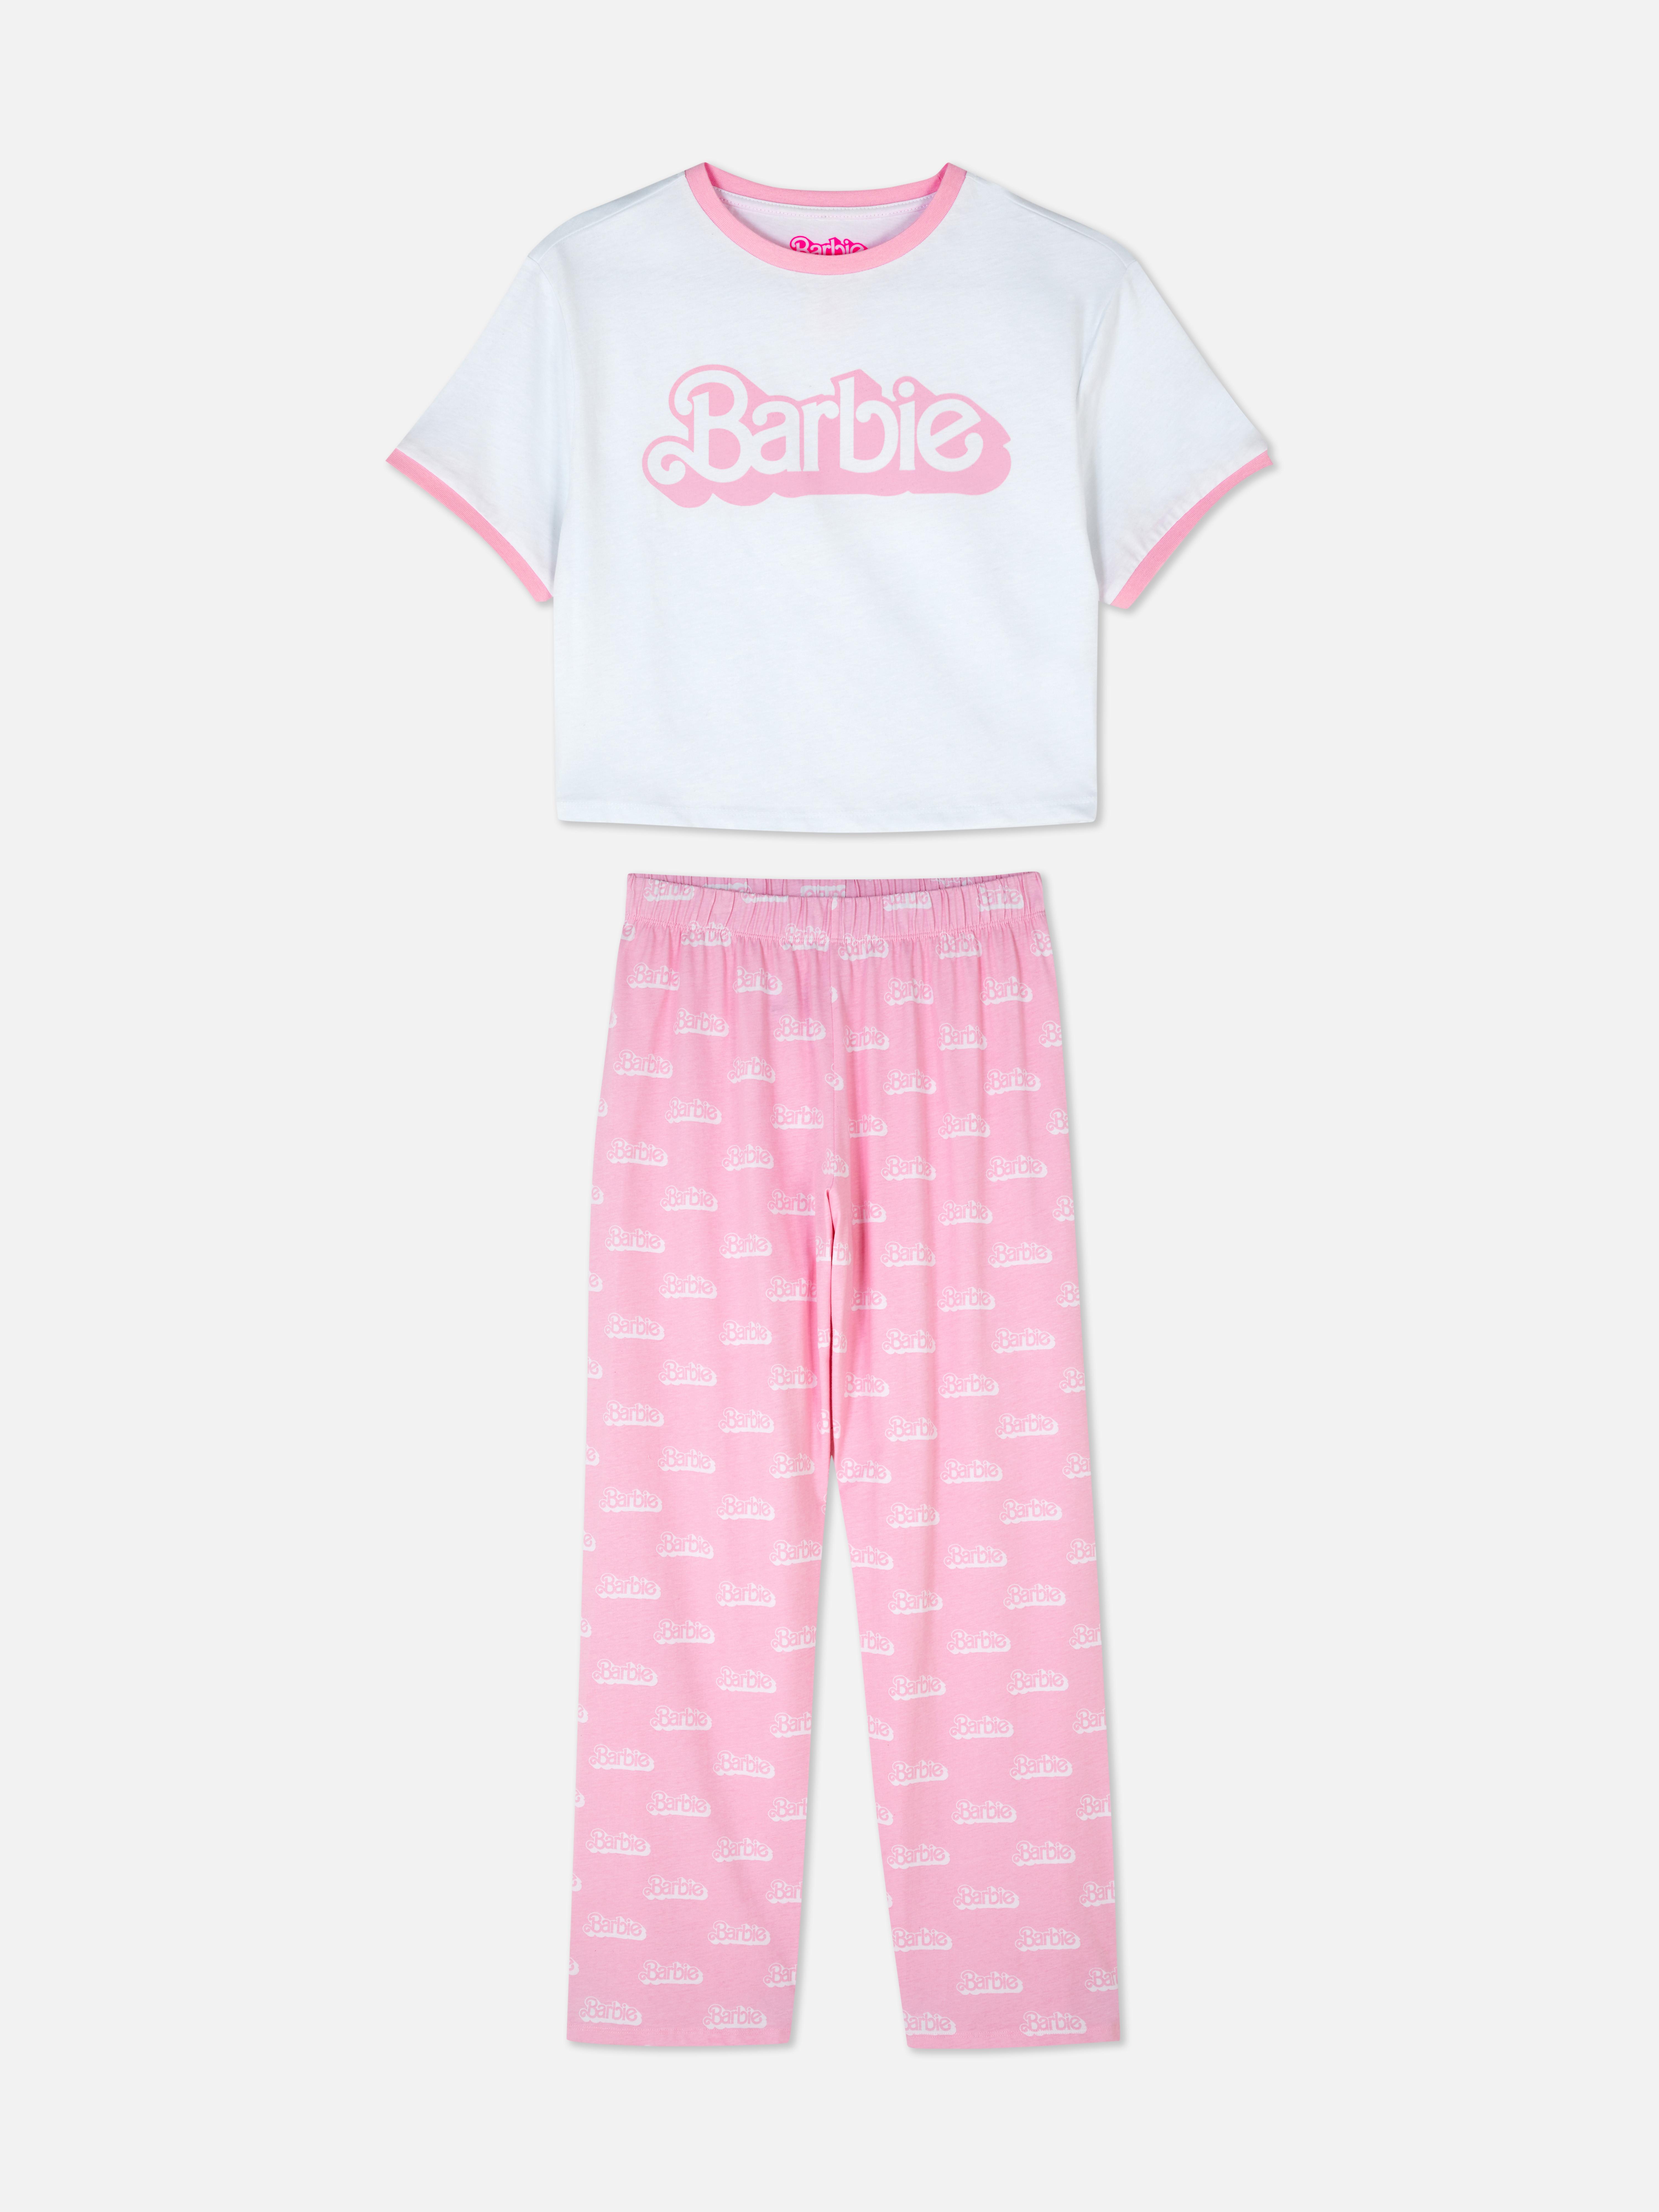 Women's Barbie Ringer Pyjama Set